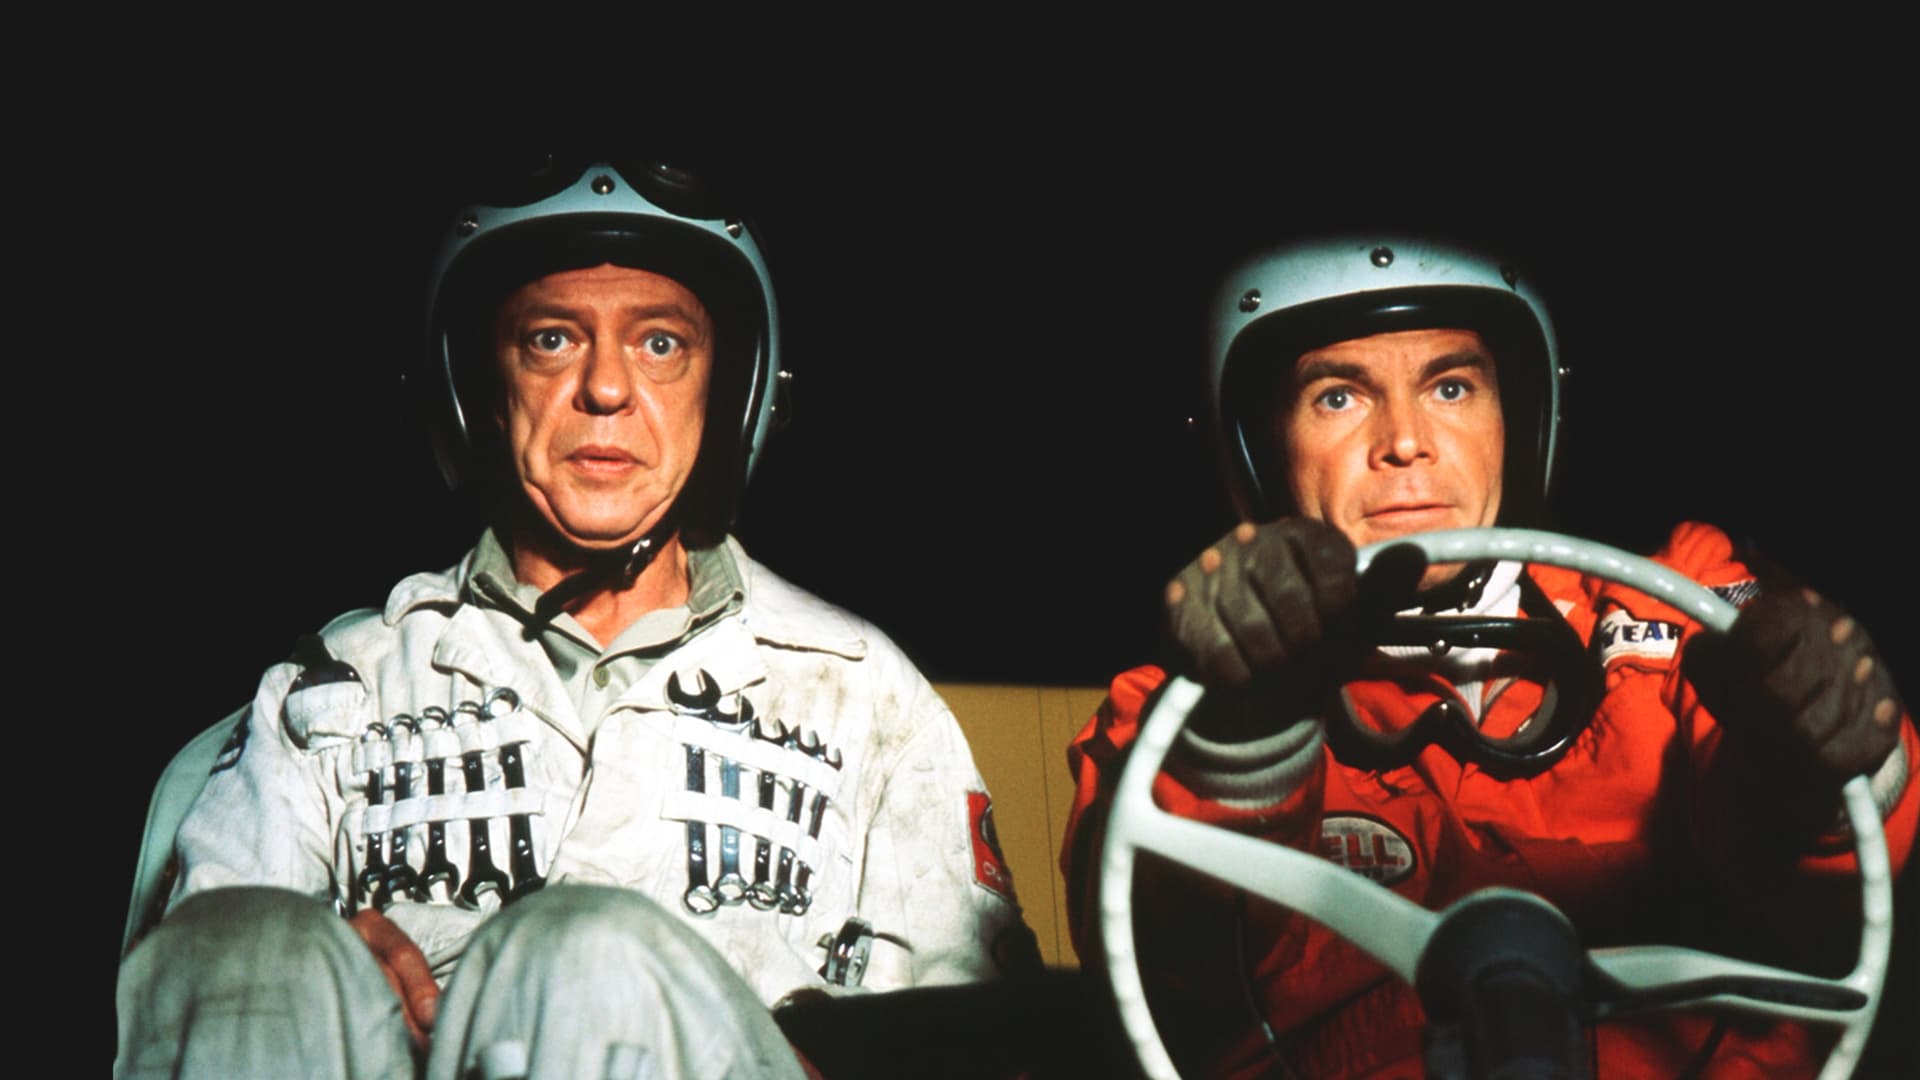 Herbie al rally di Montecarlo (1977)